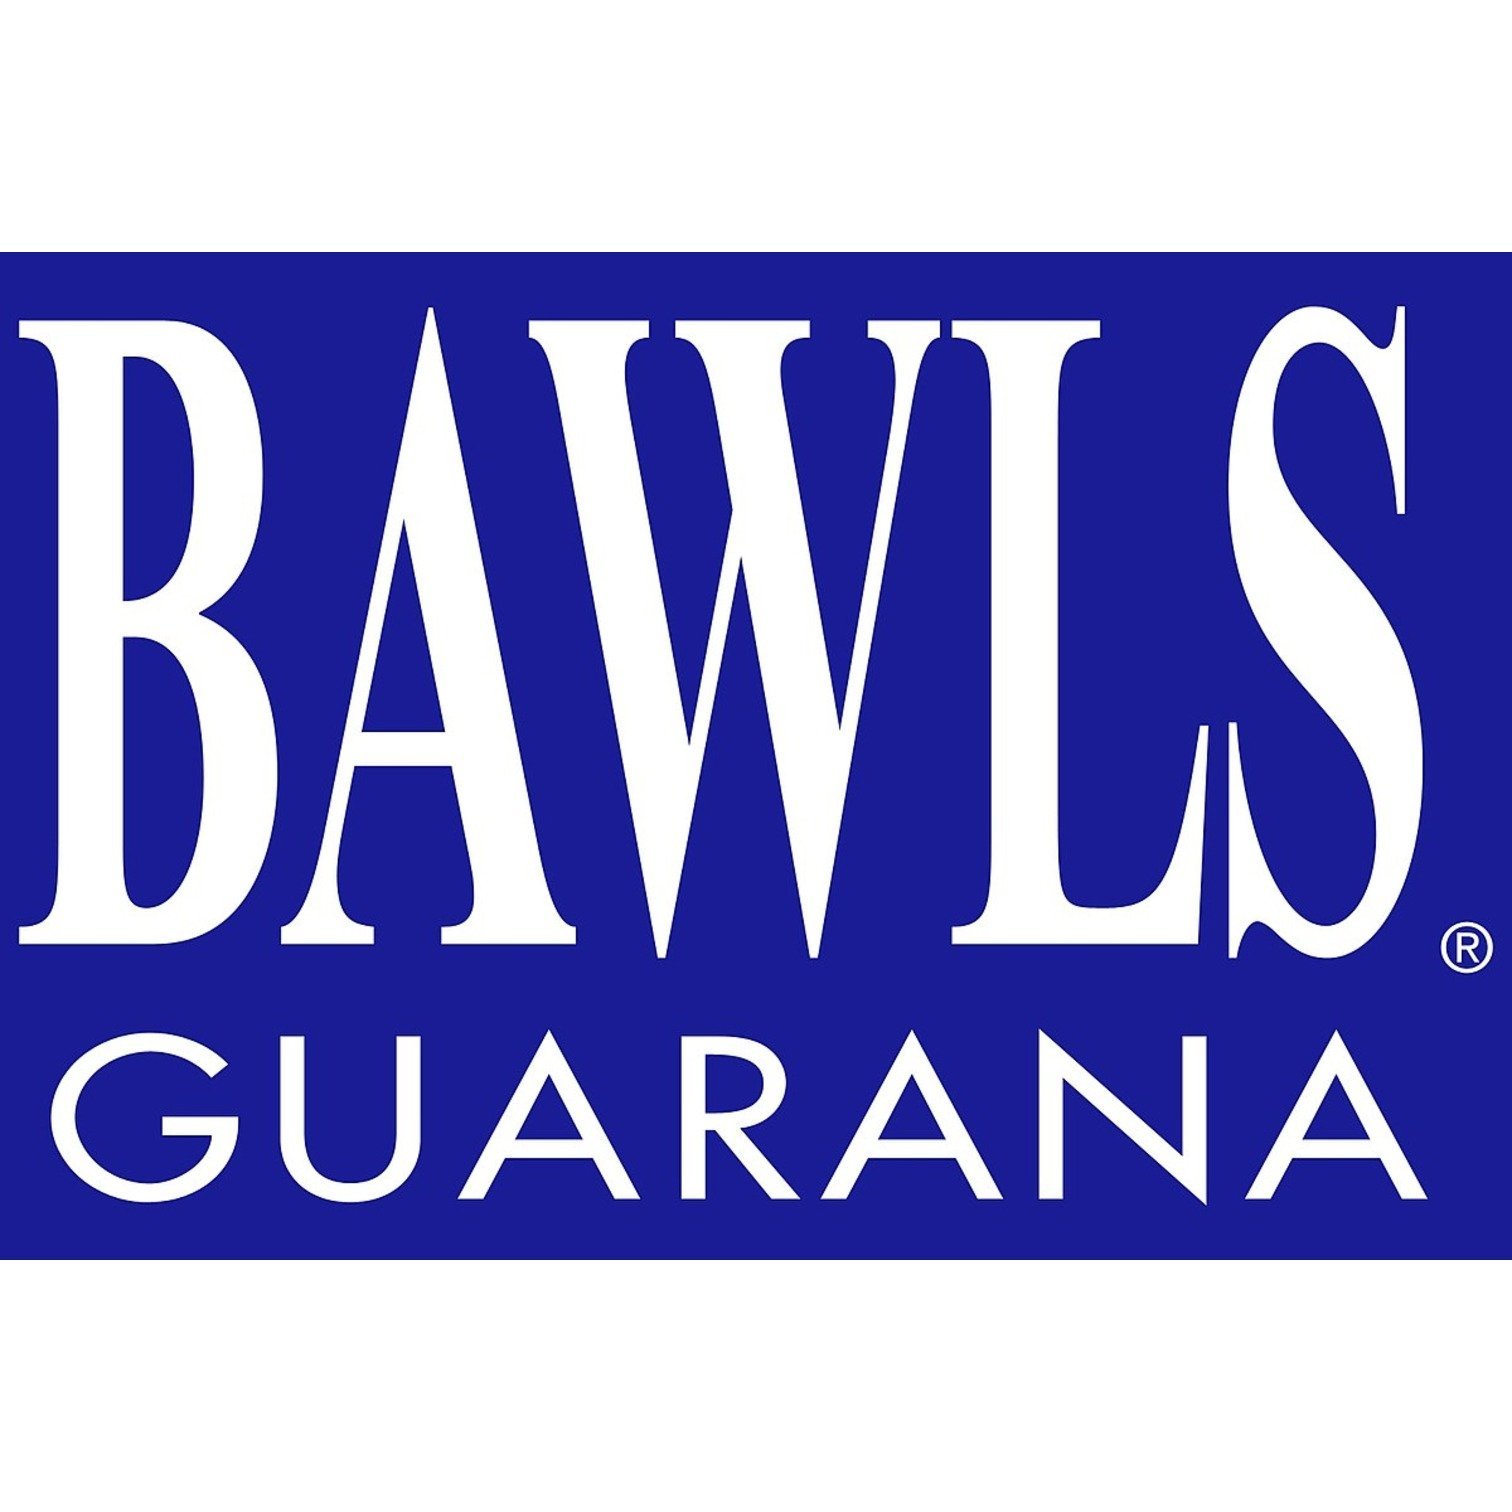 Bawls Guarana